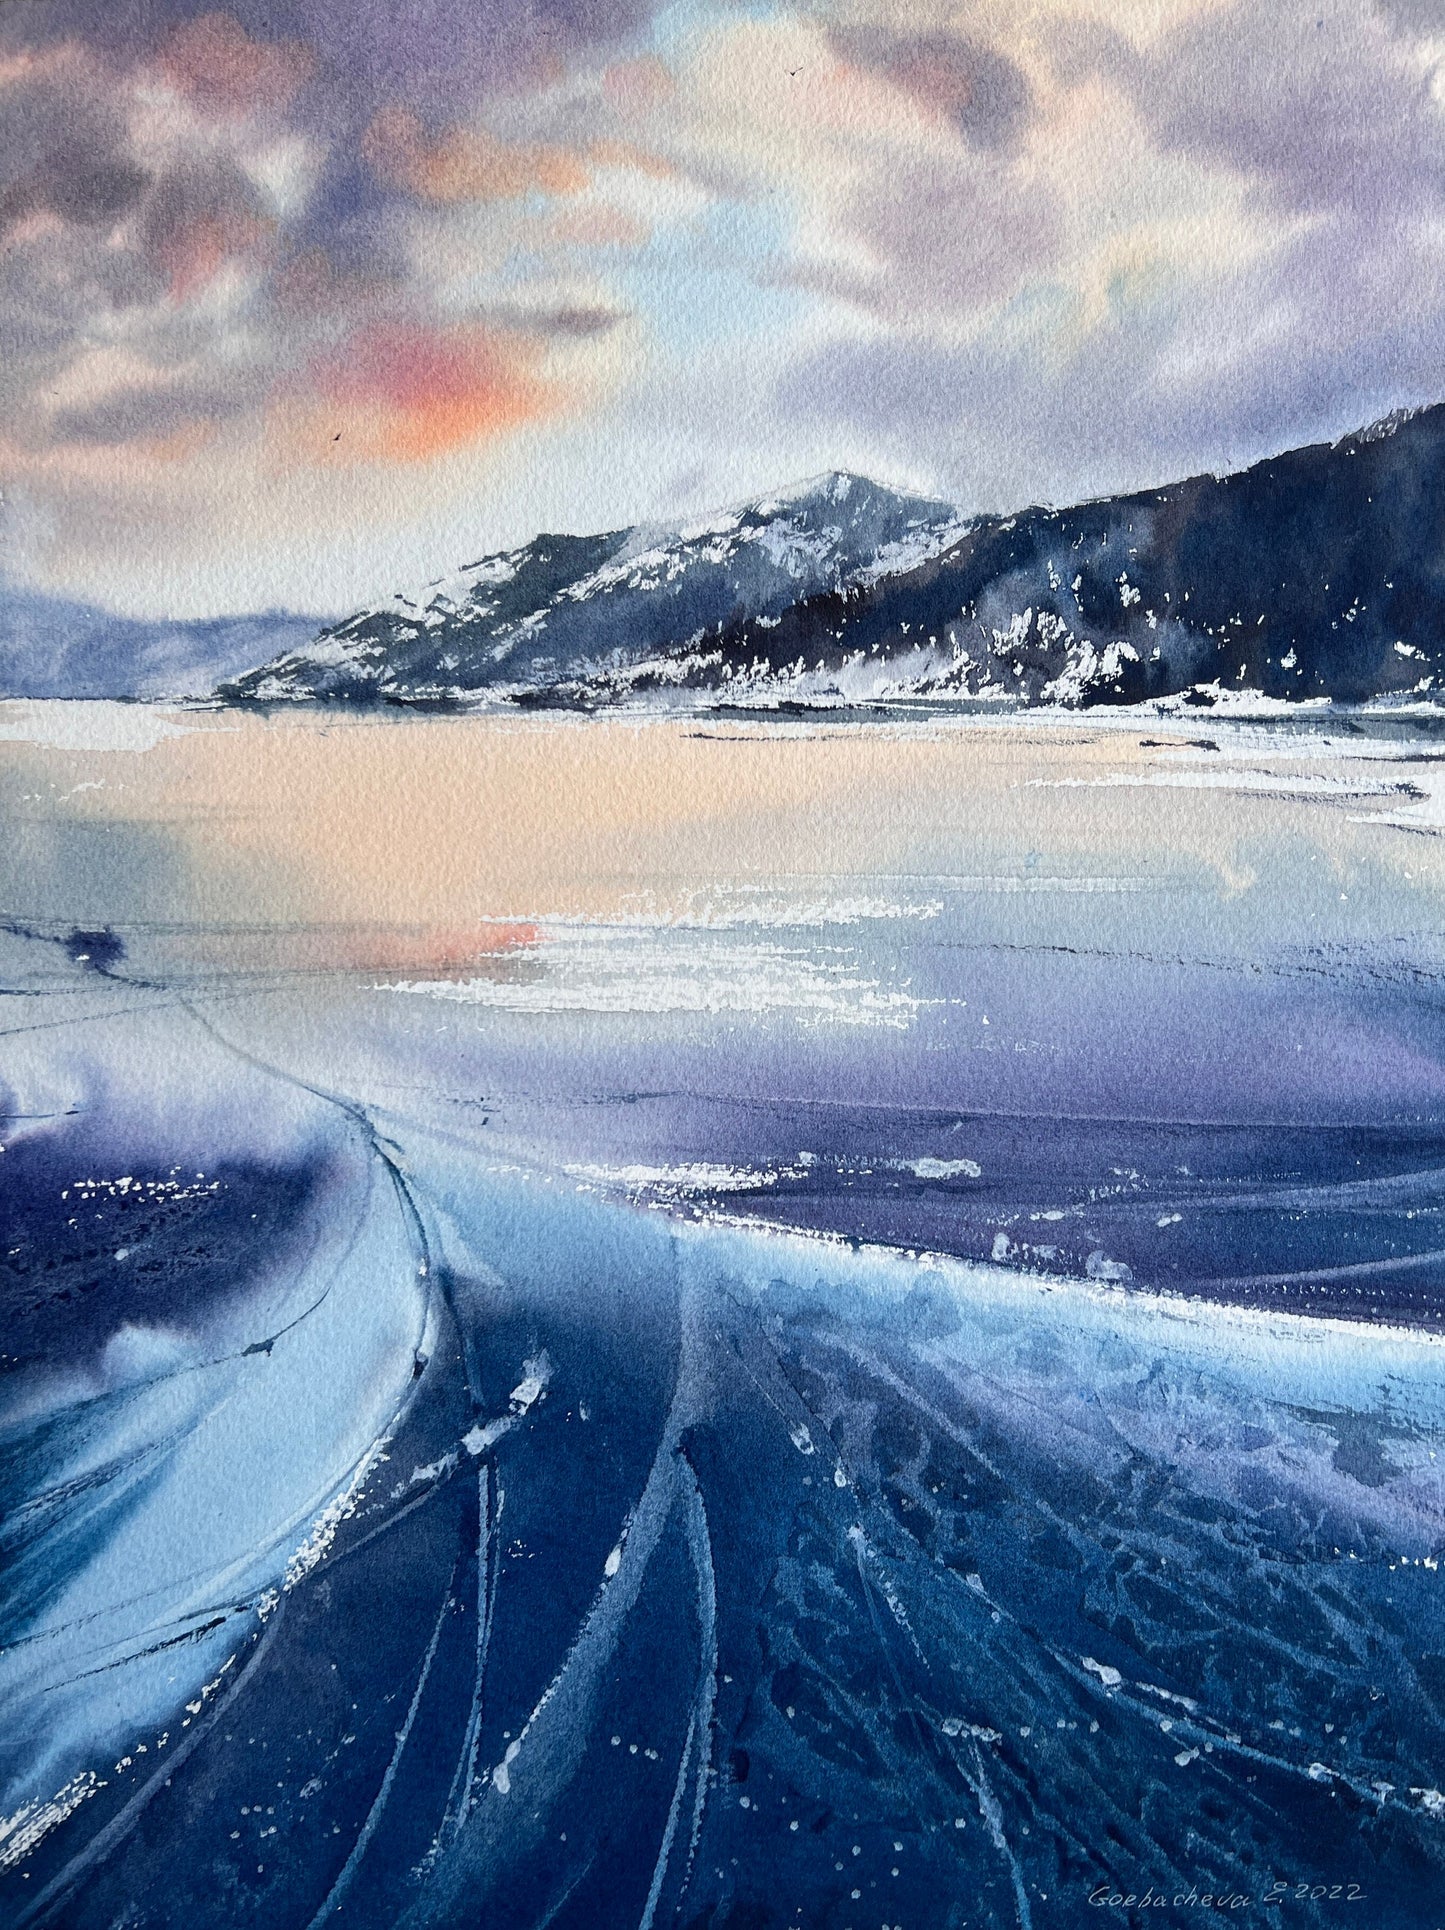 Baikal Lake Painting, Watercolor Original, Frozen Winter Landscape, Frosty Day, Blue Ice Art, Christmas Wall Decor, Gift